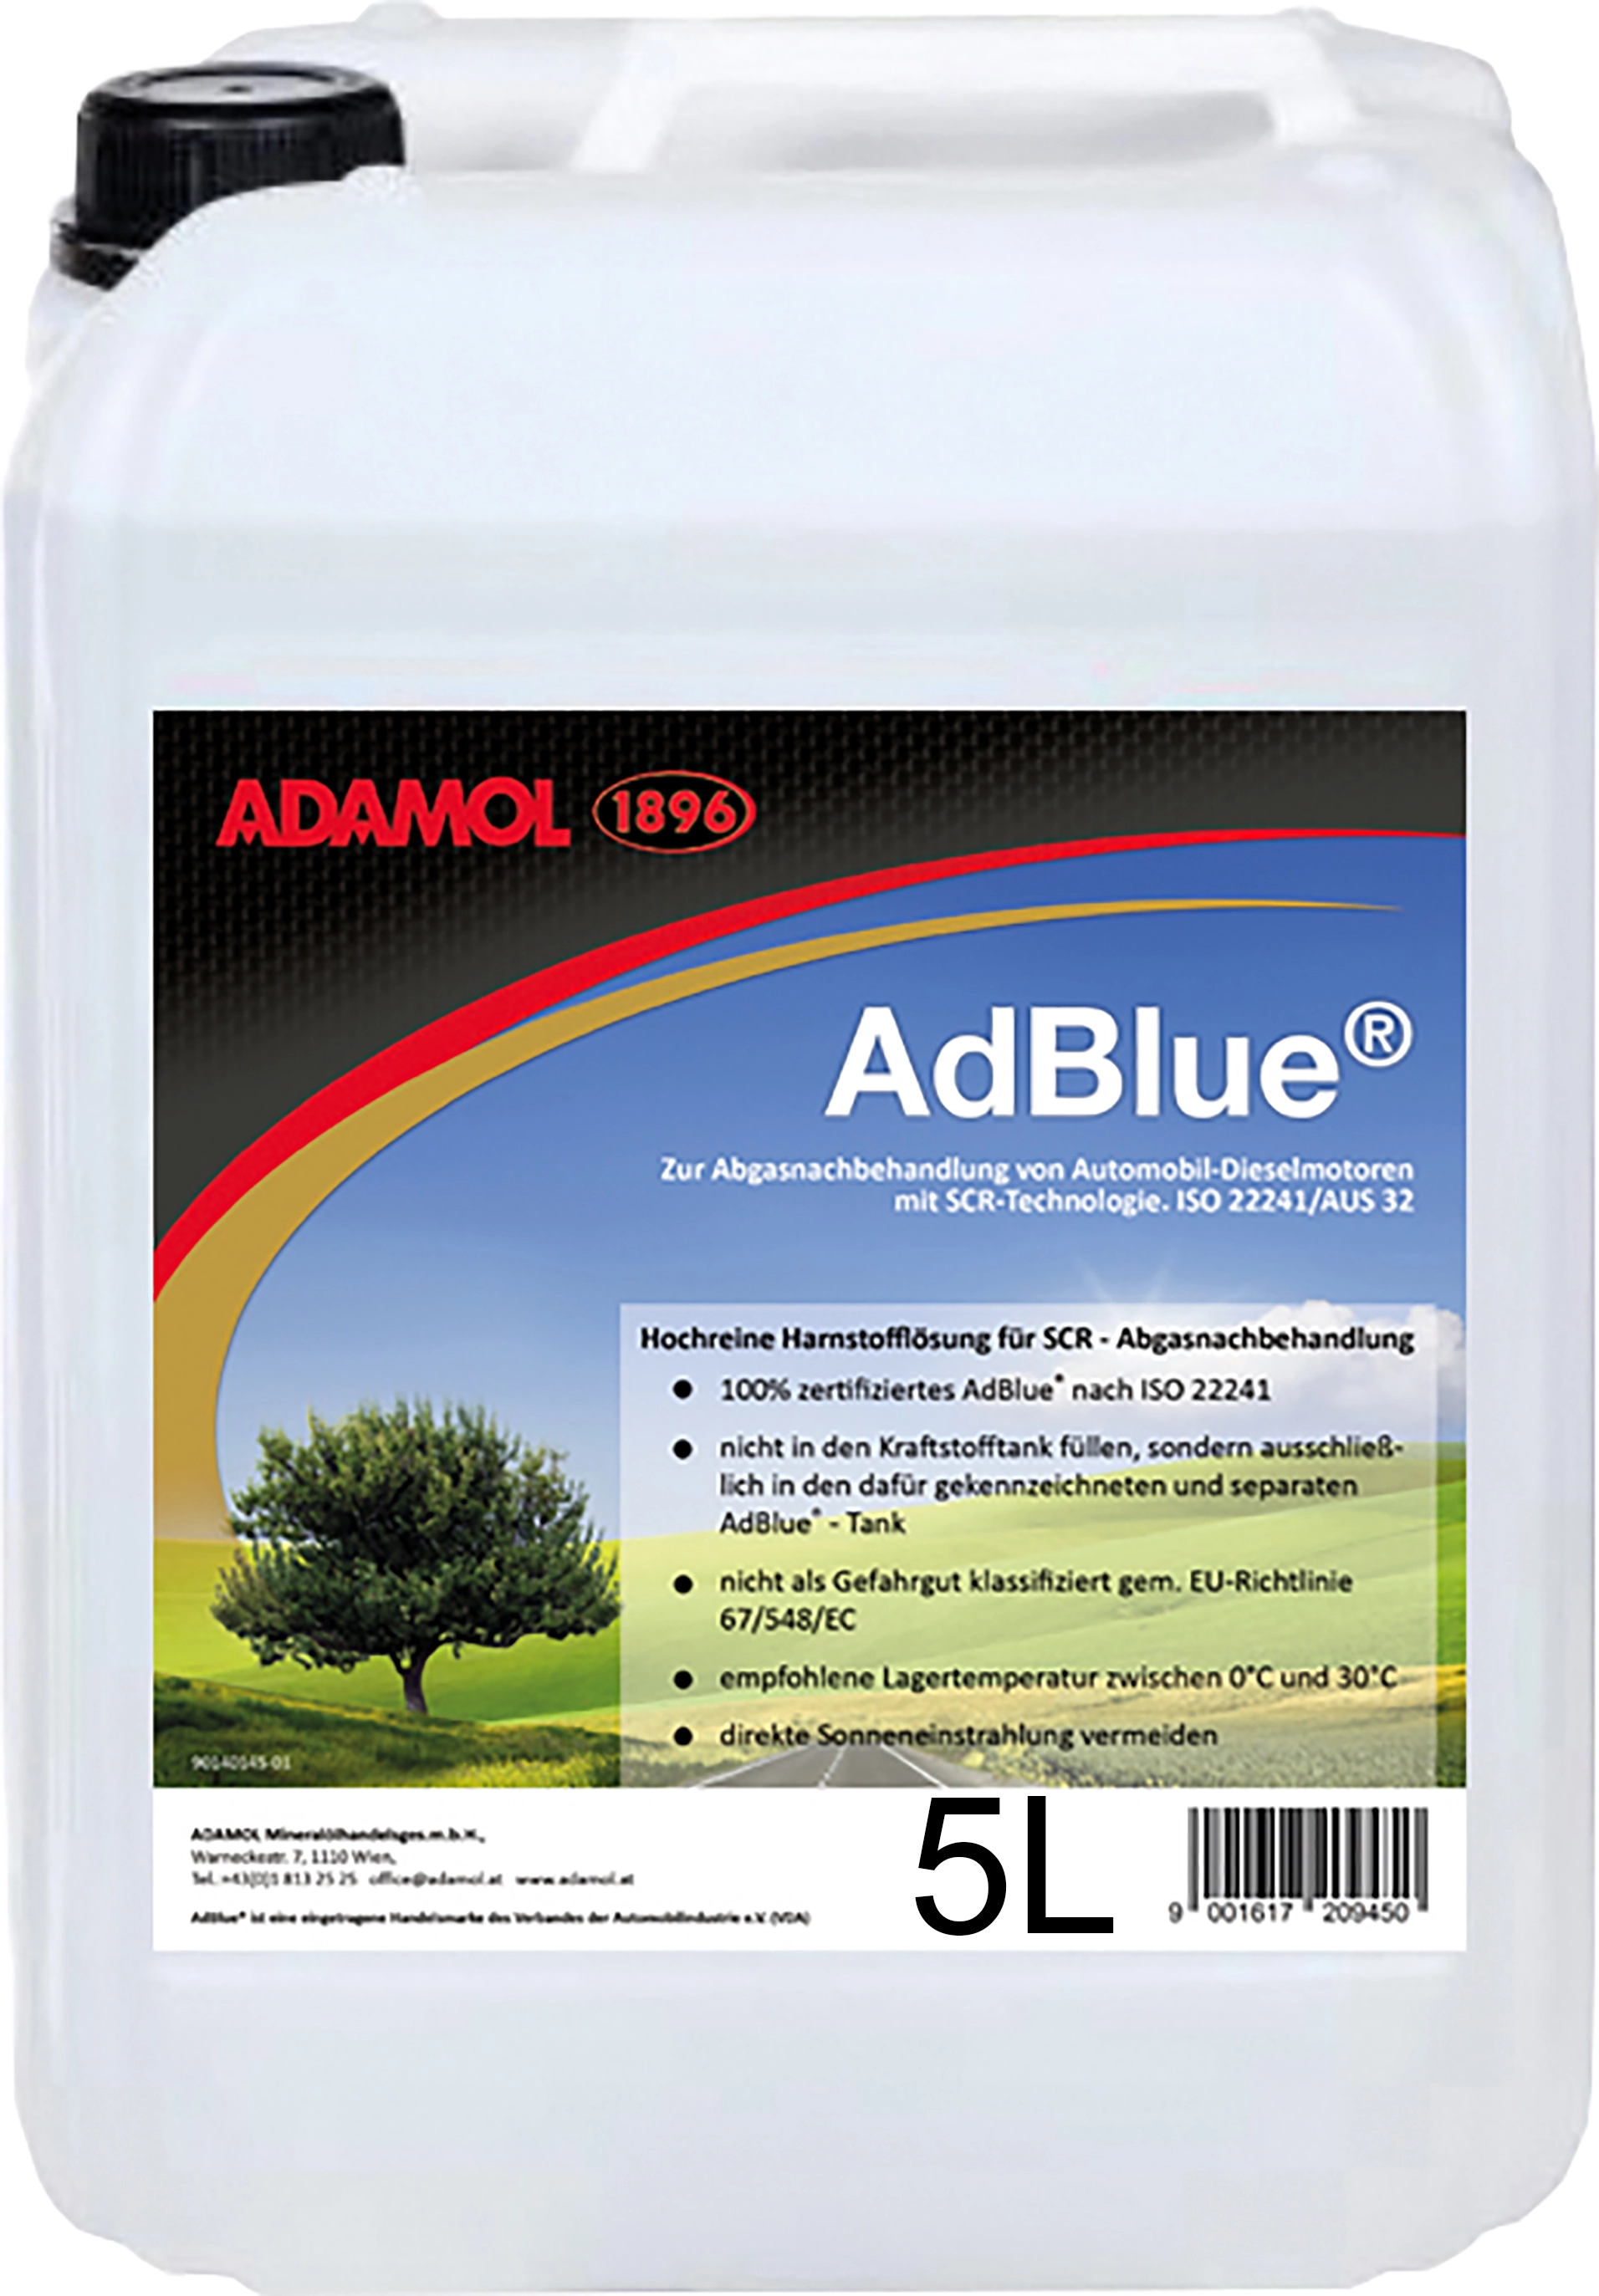 Adamol 1896 Adblue 5 l kaufen bei OBI